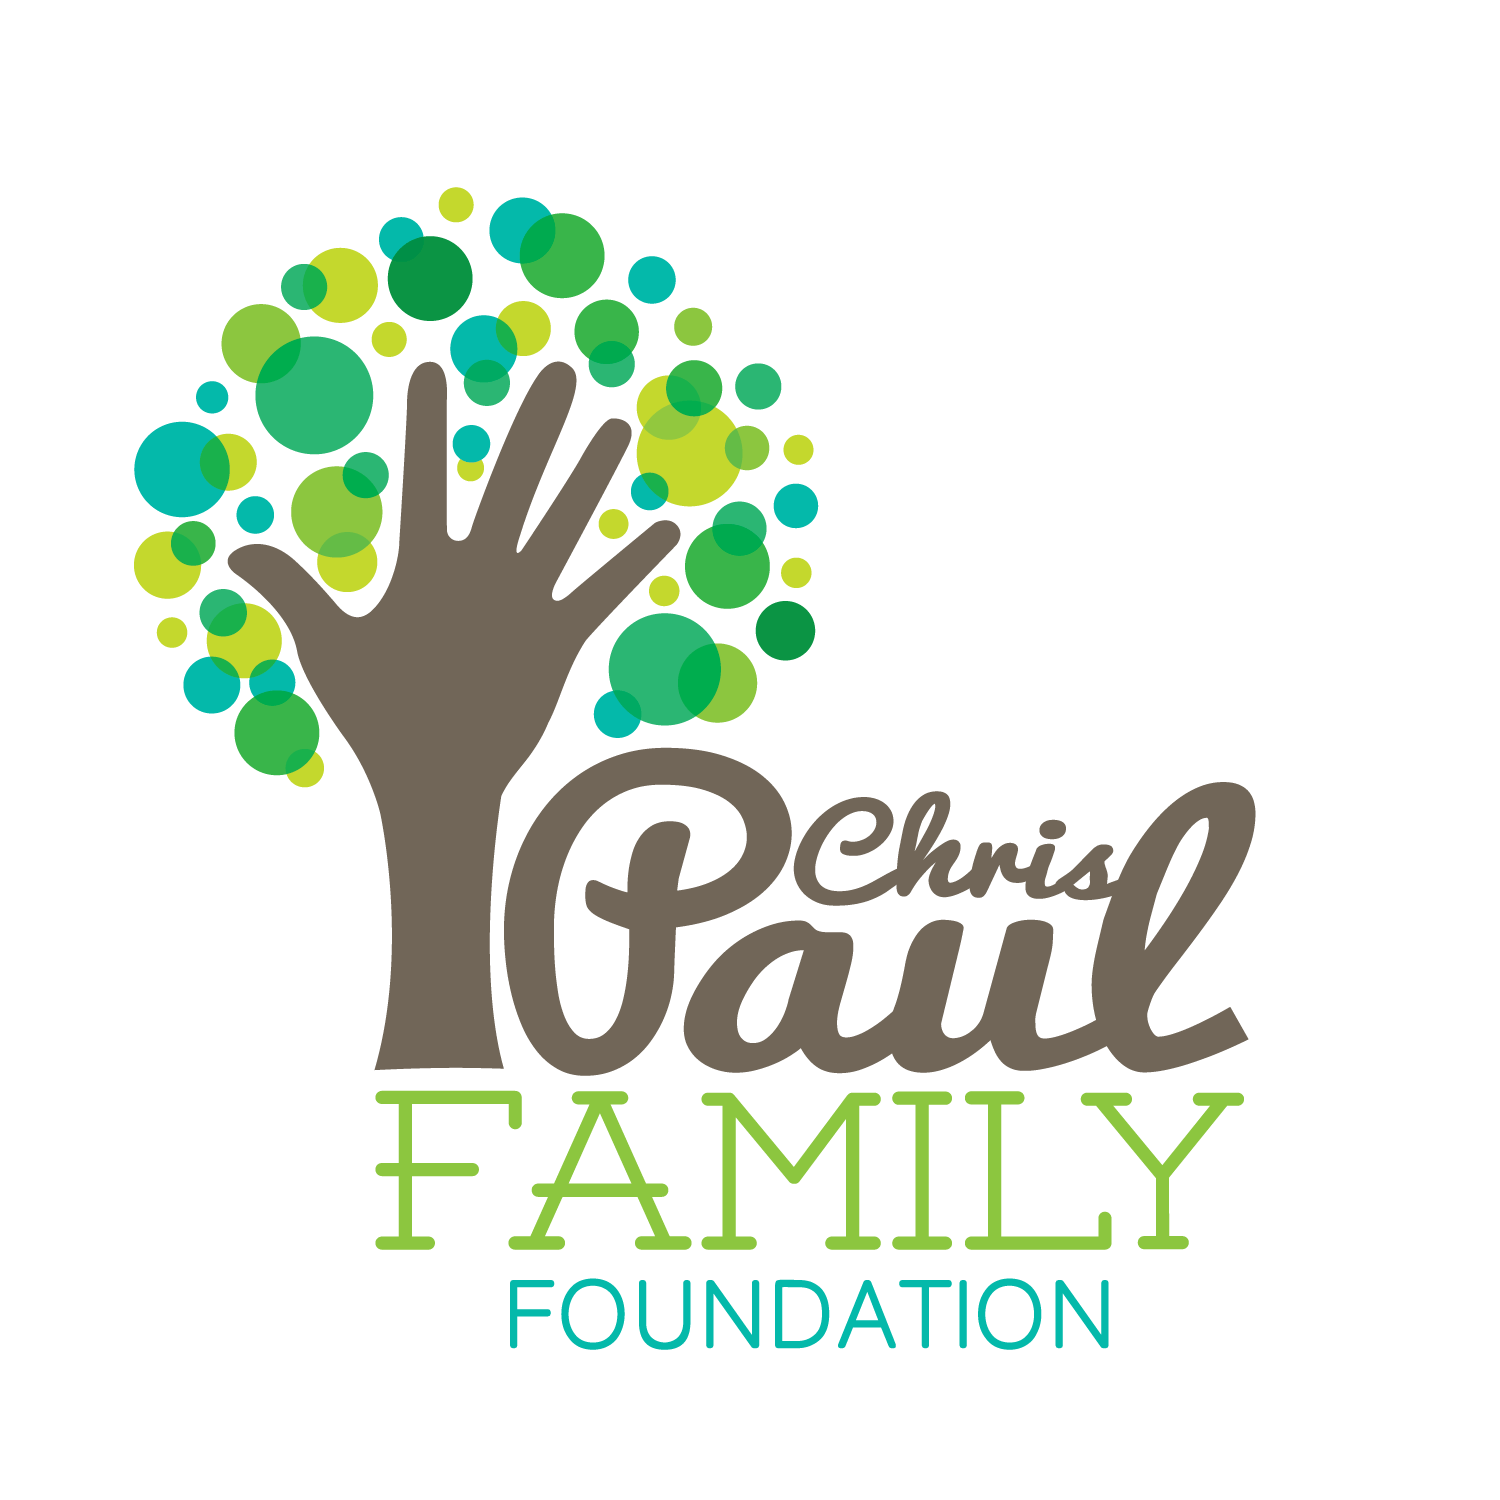 Foundation Logo - Foundation - Chris Paul CP3